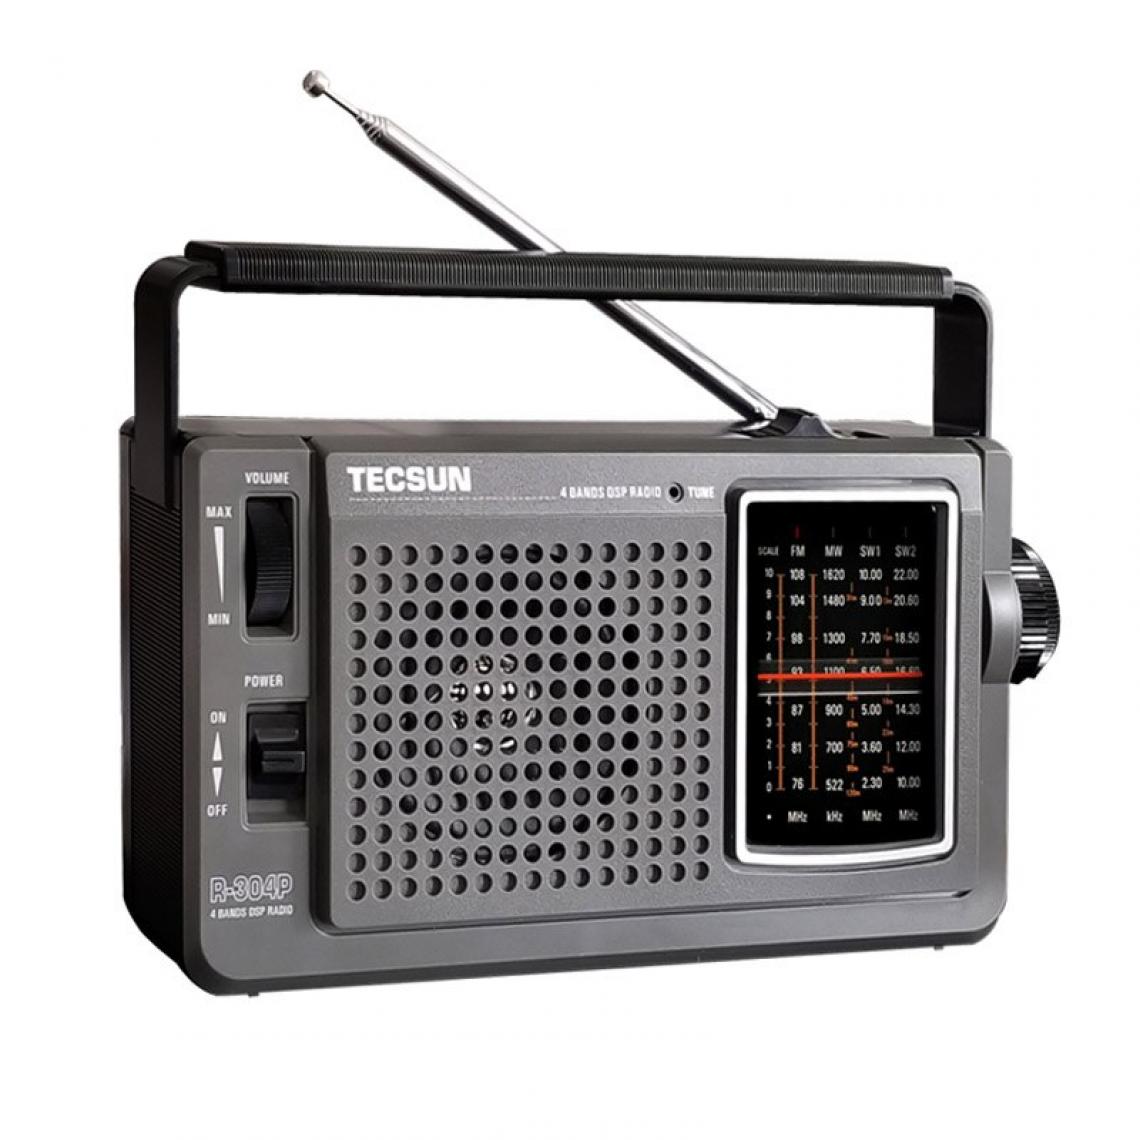 Universal - Radio DSP Récepteur radio portable Radio FM Radio haute sensibilité(Le noir) - Radio